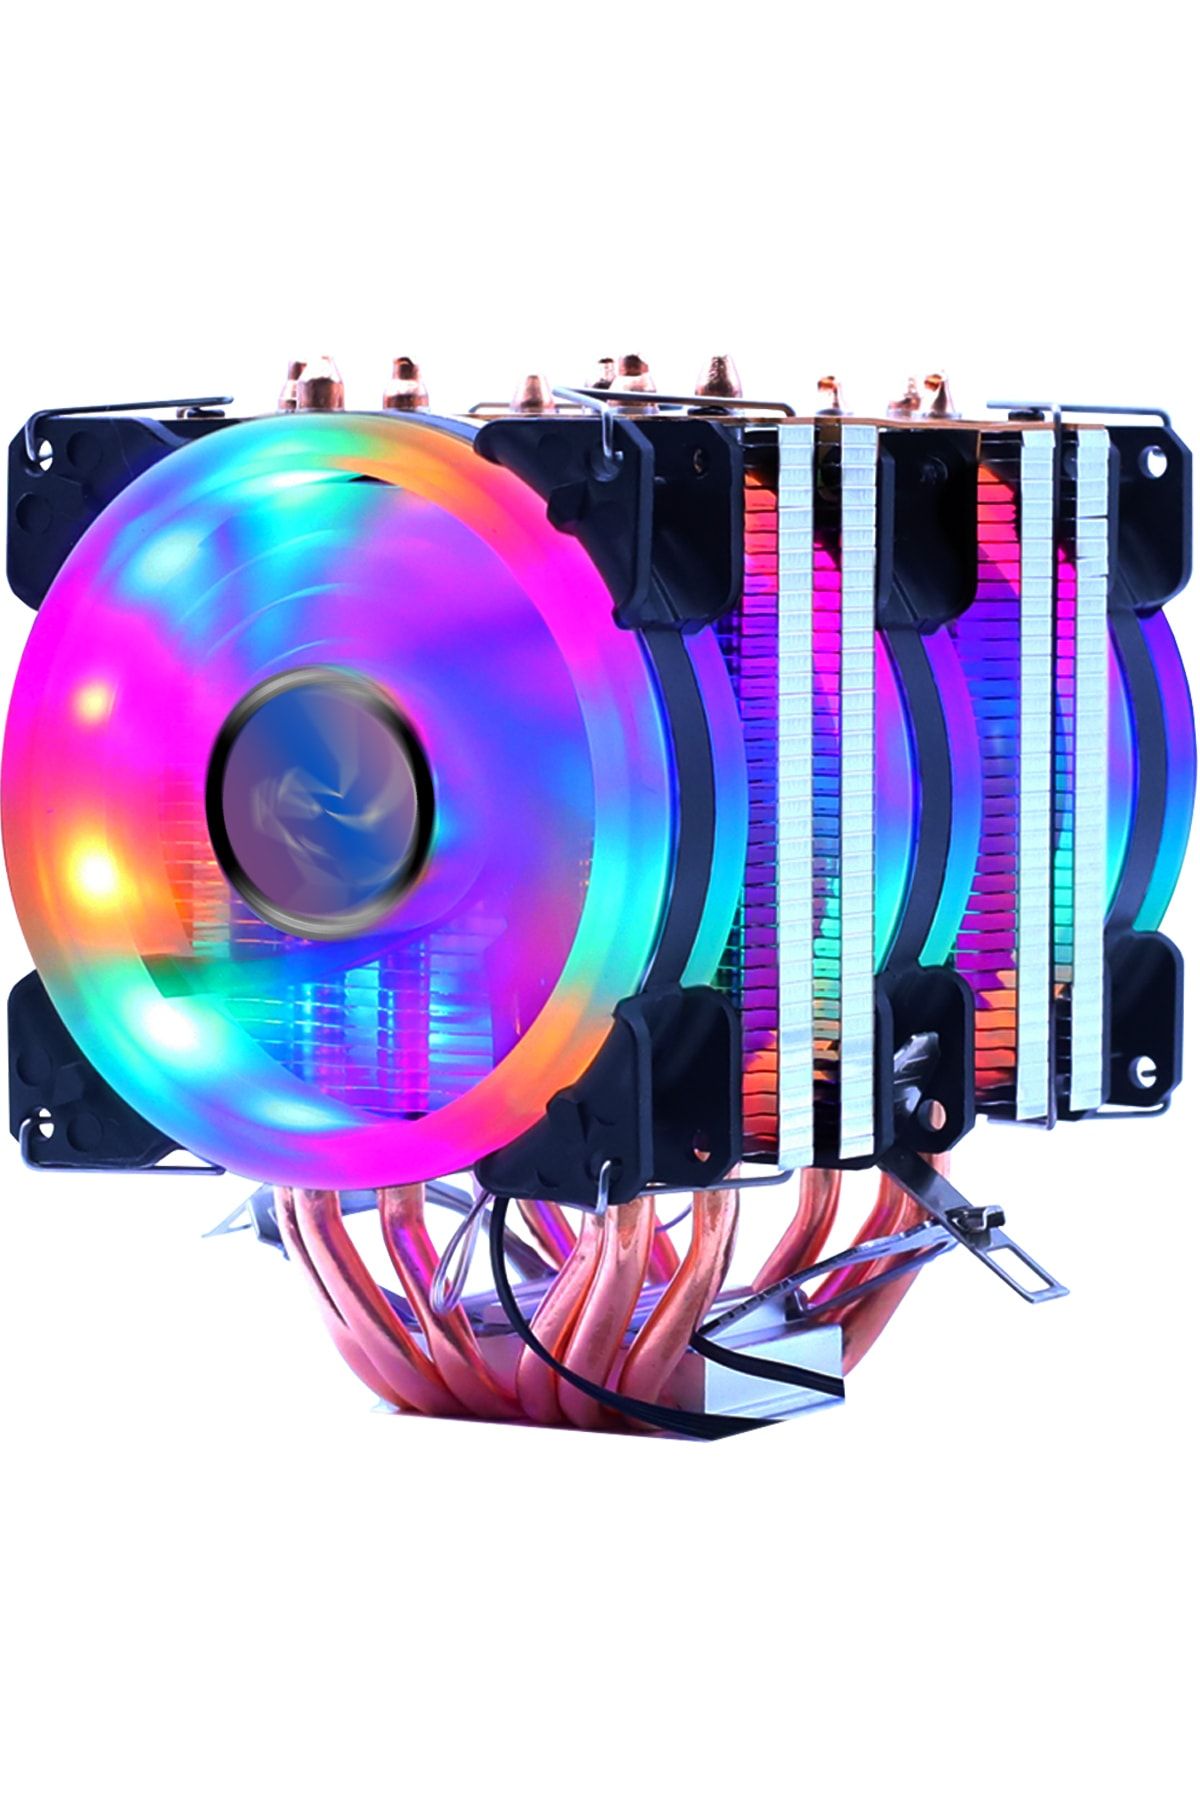 GAMETECH Freezer Hd 3.0 Amd / Intel Gaming Rainbow Kule Tipi Işlemci Fanı 160w Tdp